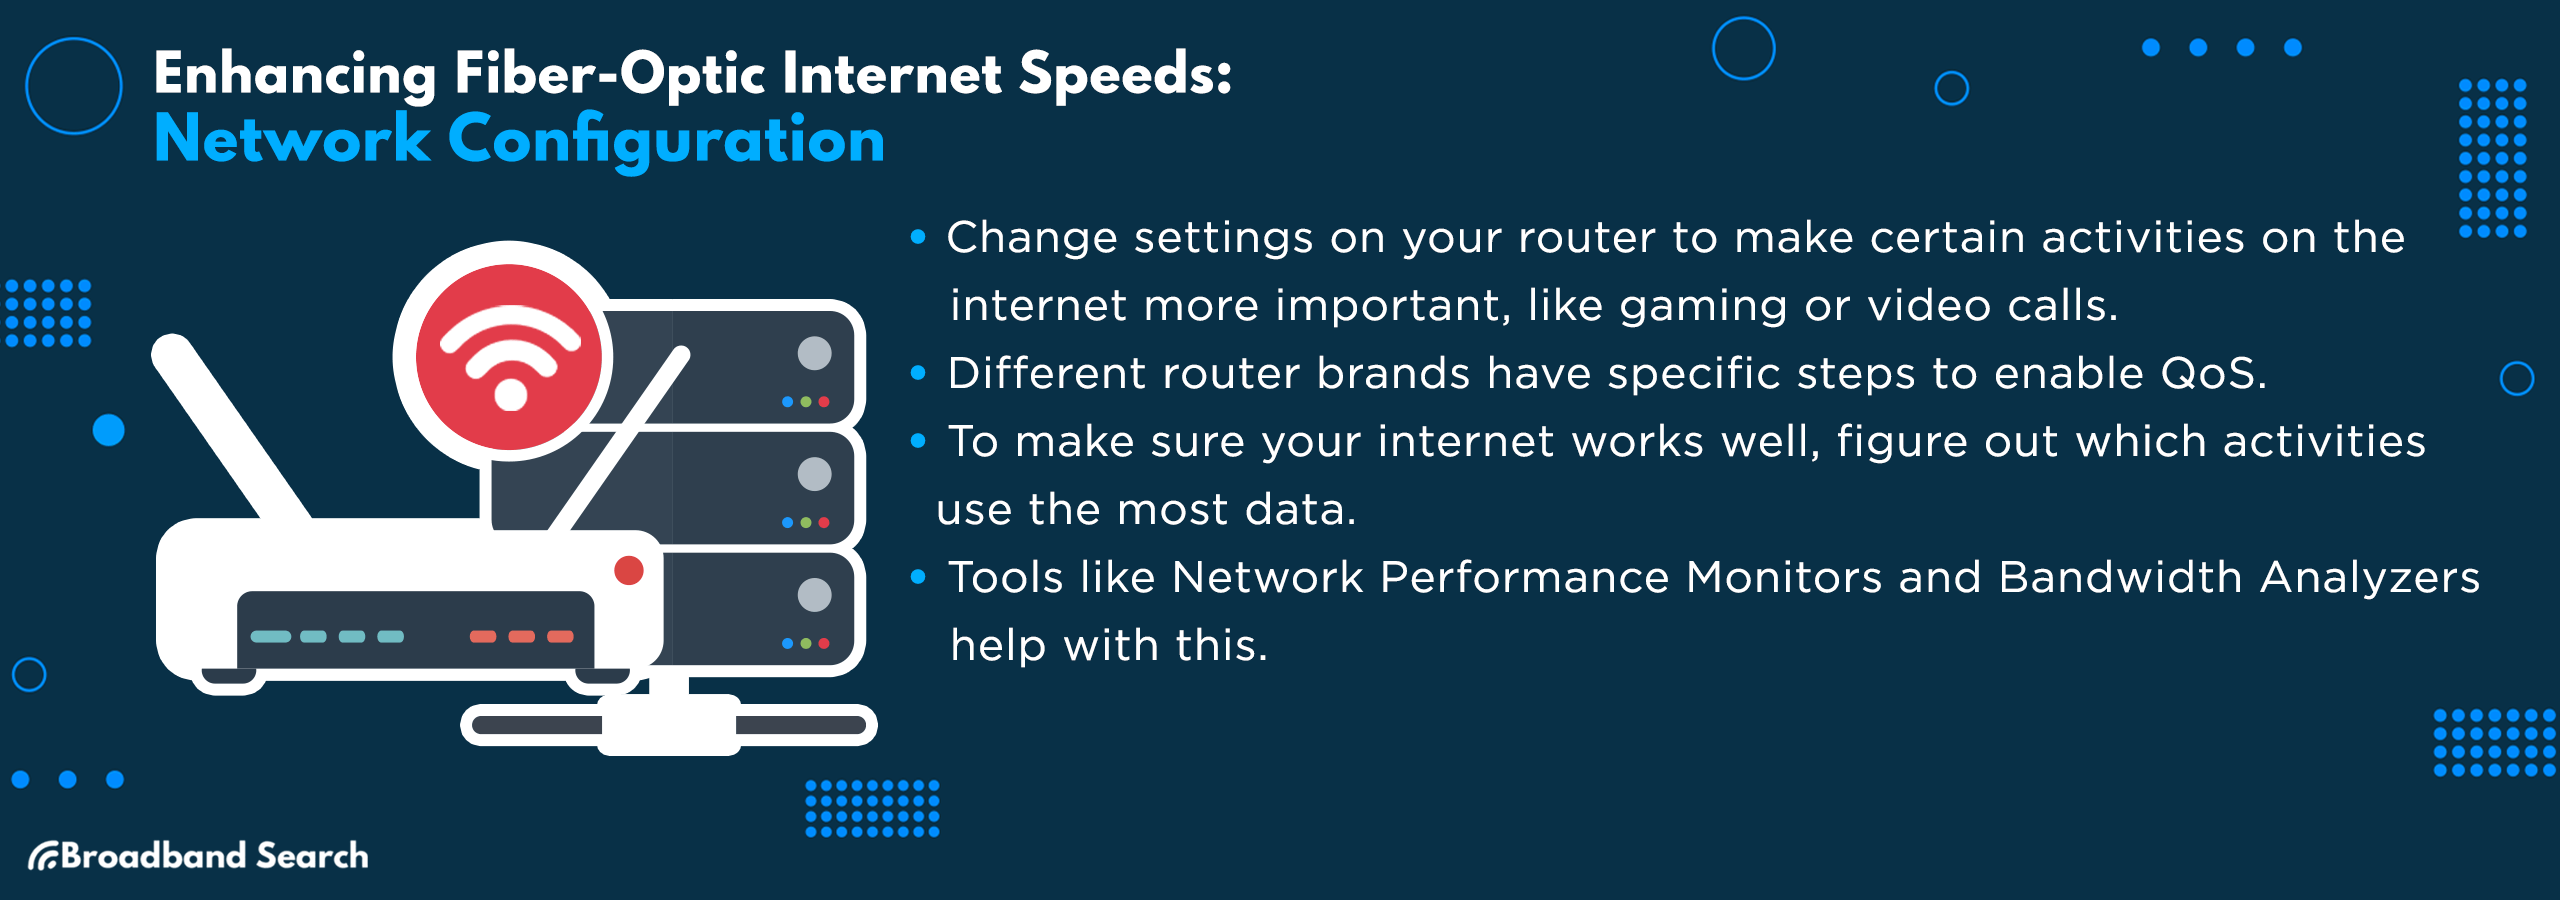 Enhancing fiber-optic internet speeds: Network Configuration